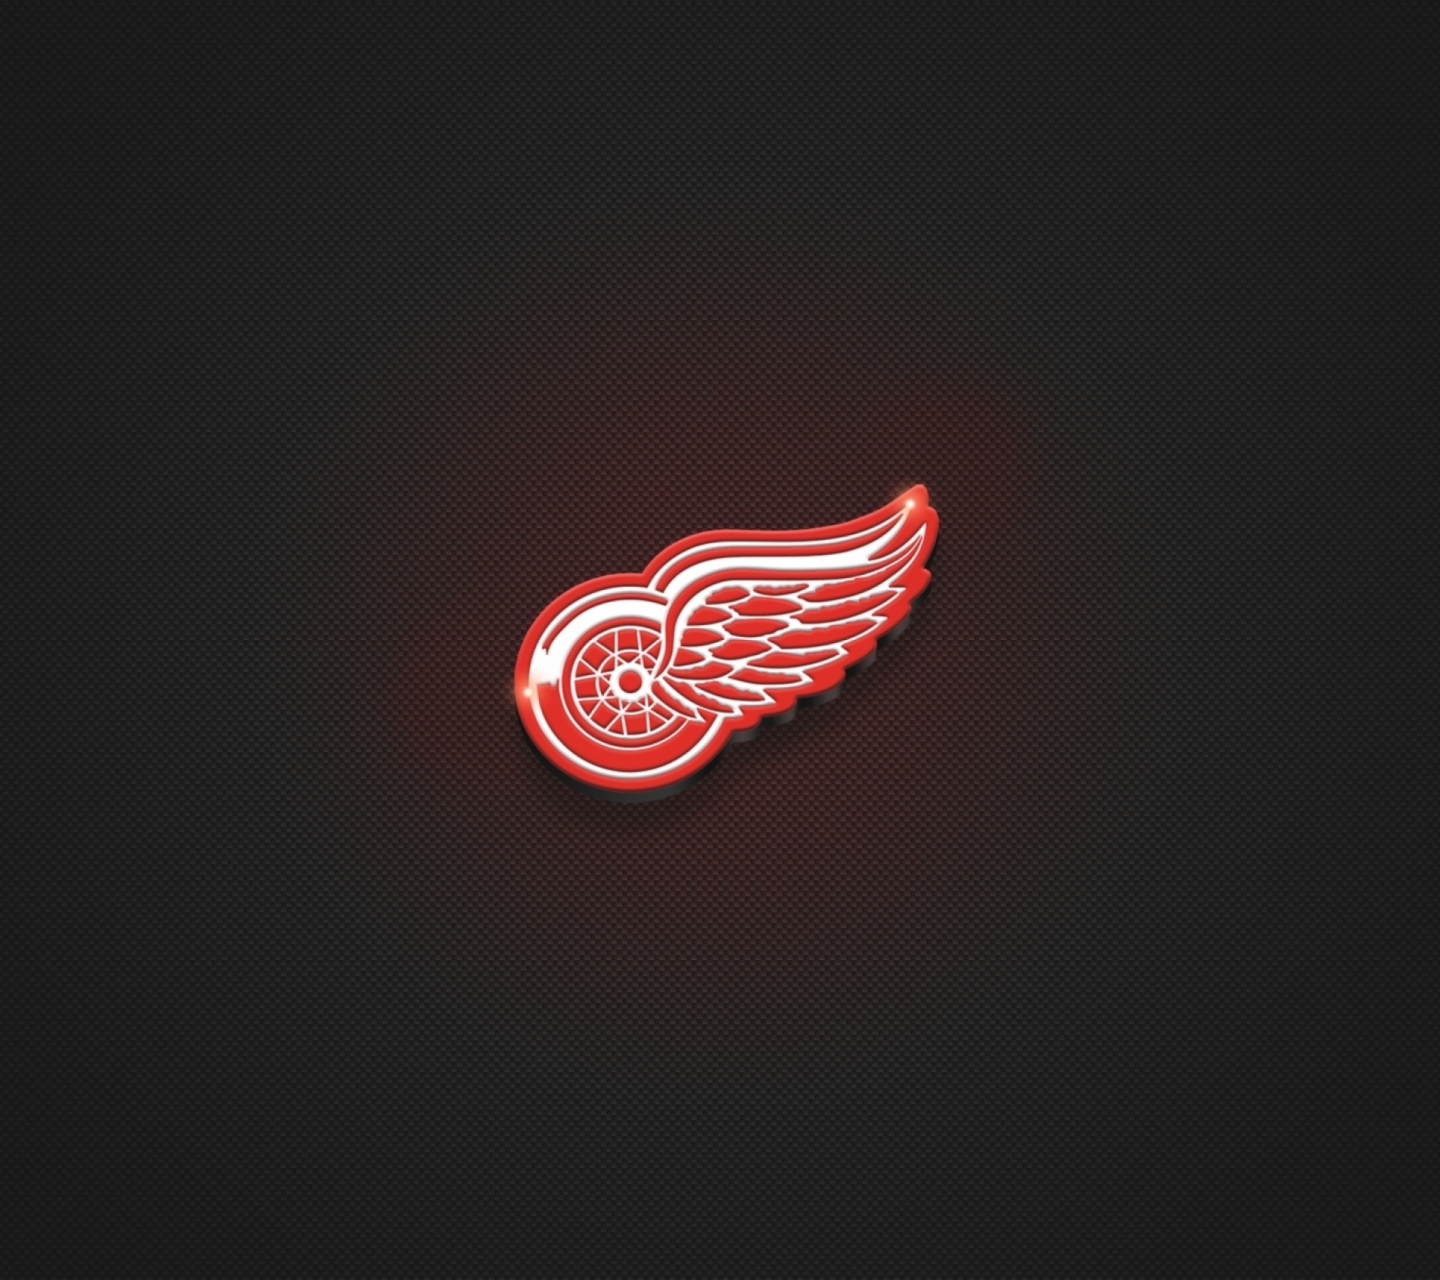 Sfondi Detroit Red Wings 1440x1280